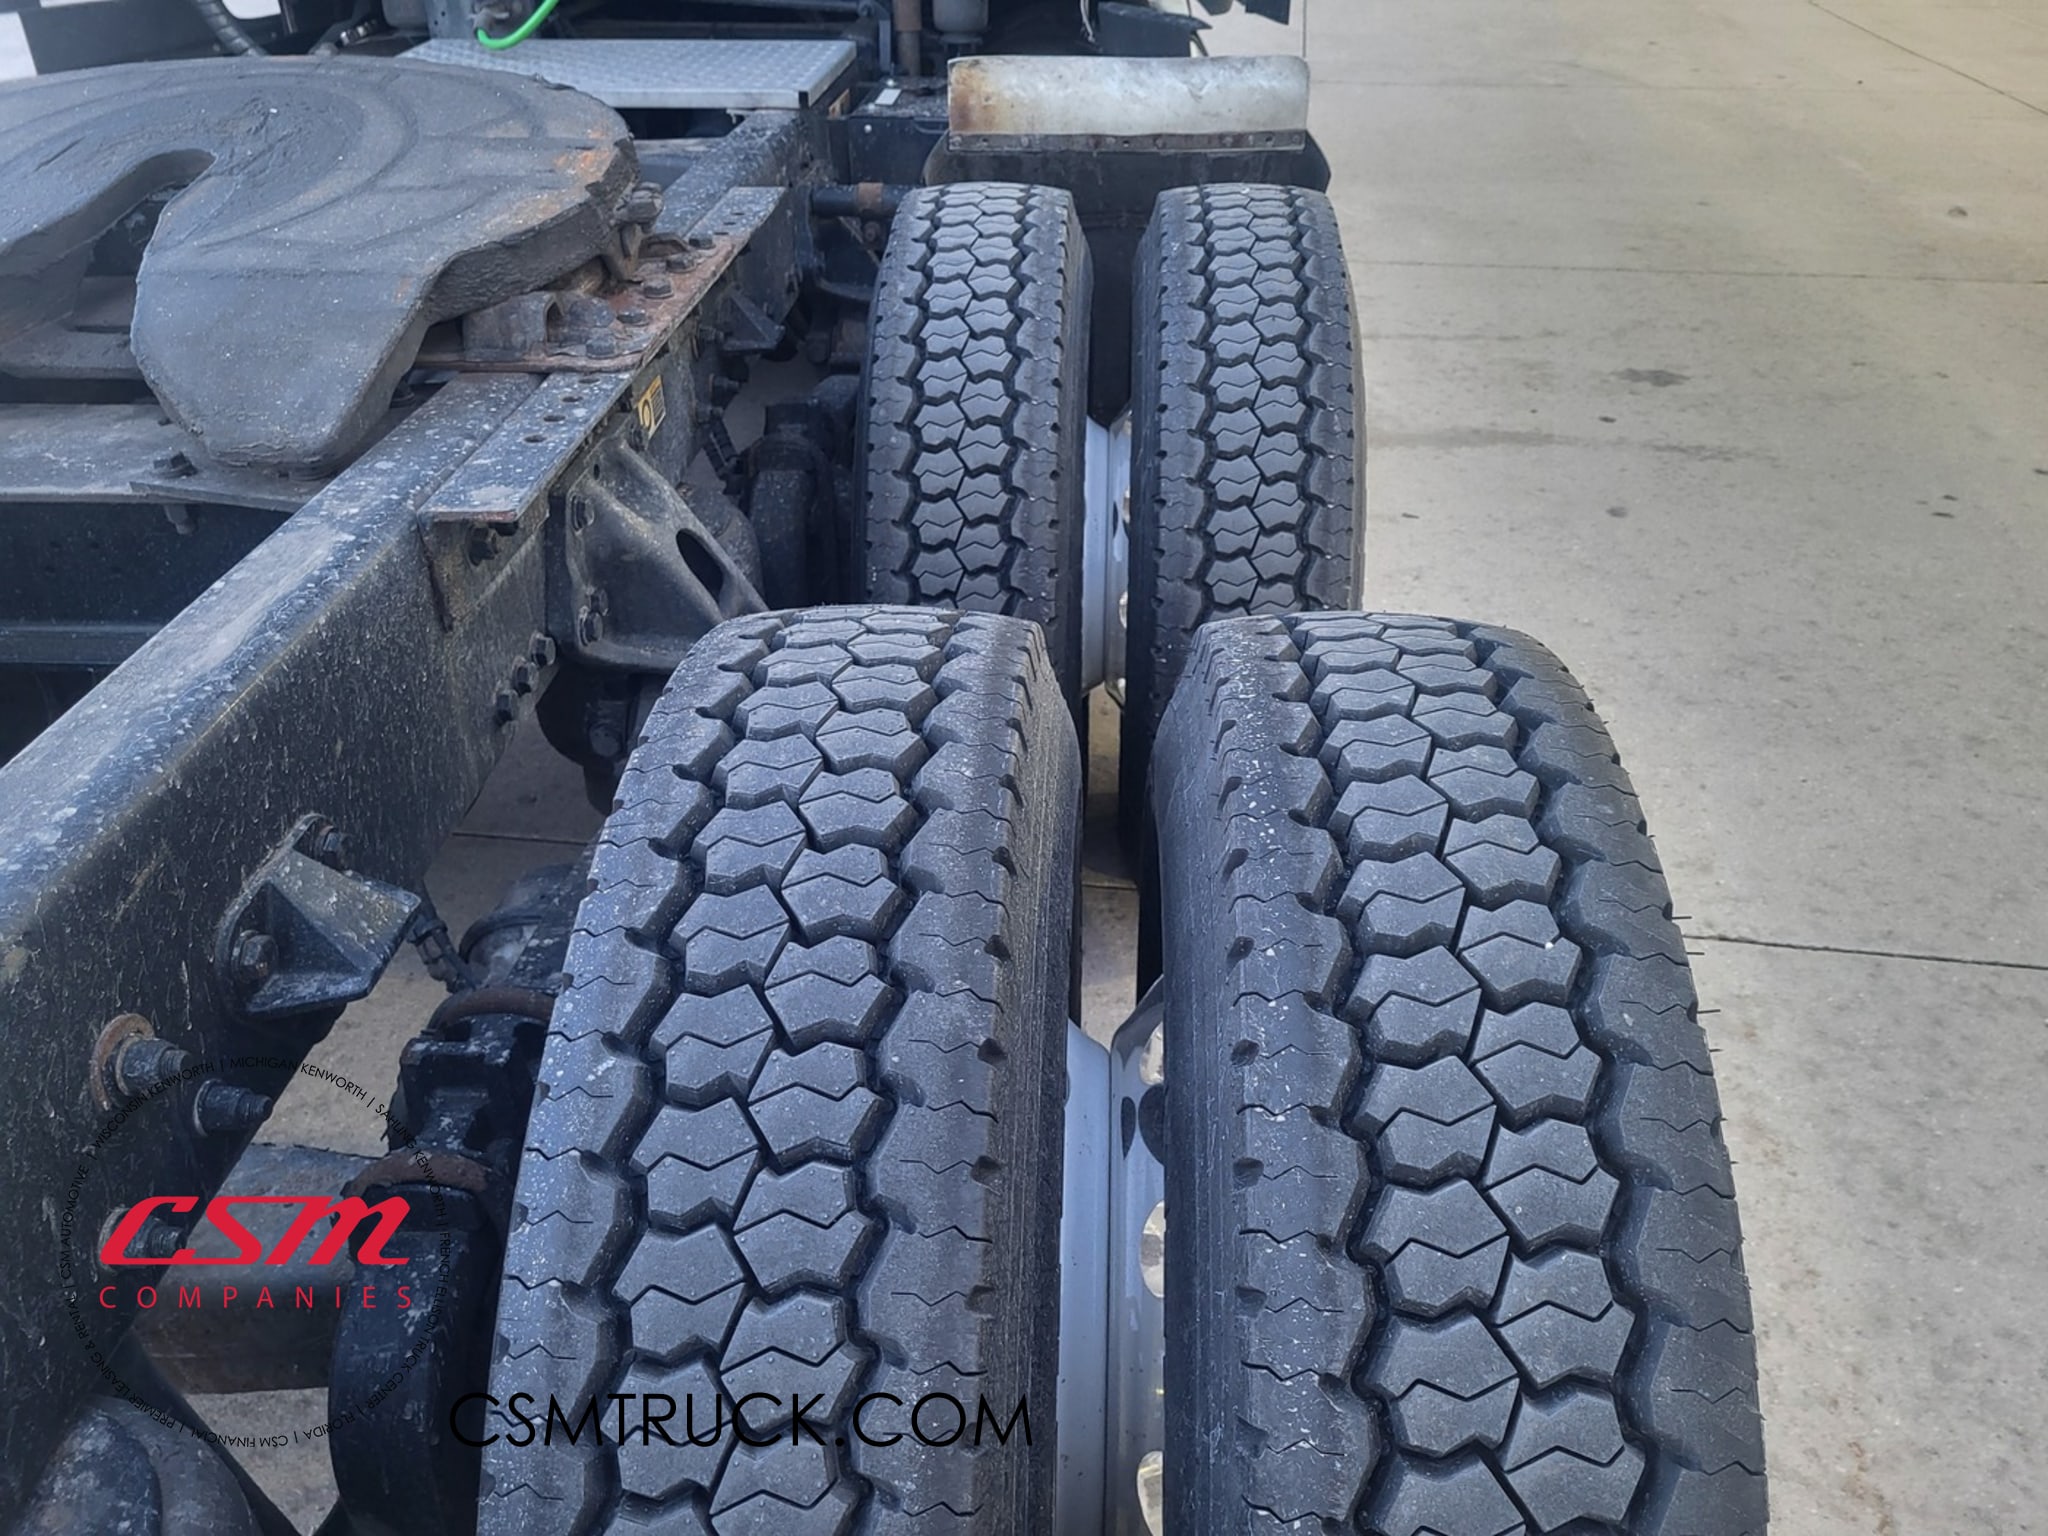 Passenger side rear frame and tire tread for this 2019 Kenworth T680 (Stock number: UKJ297535)